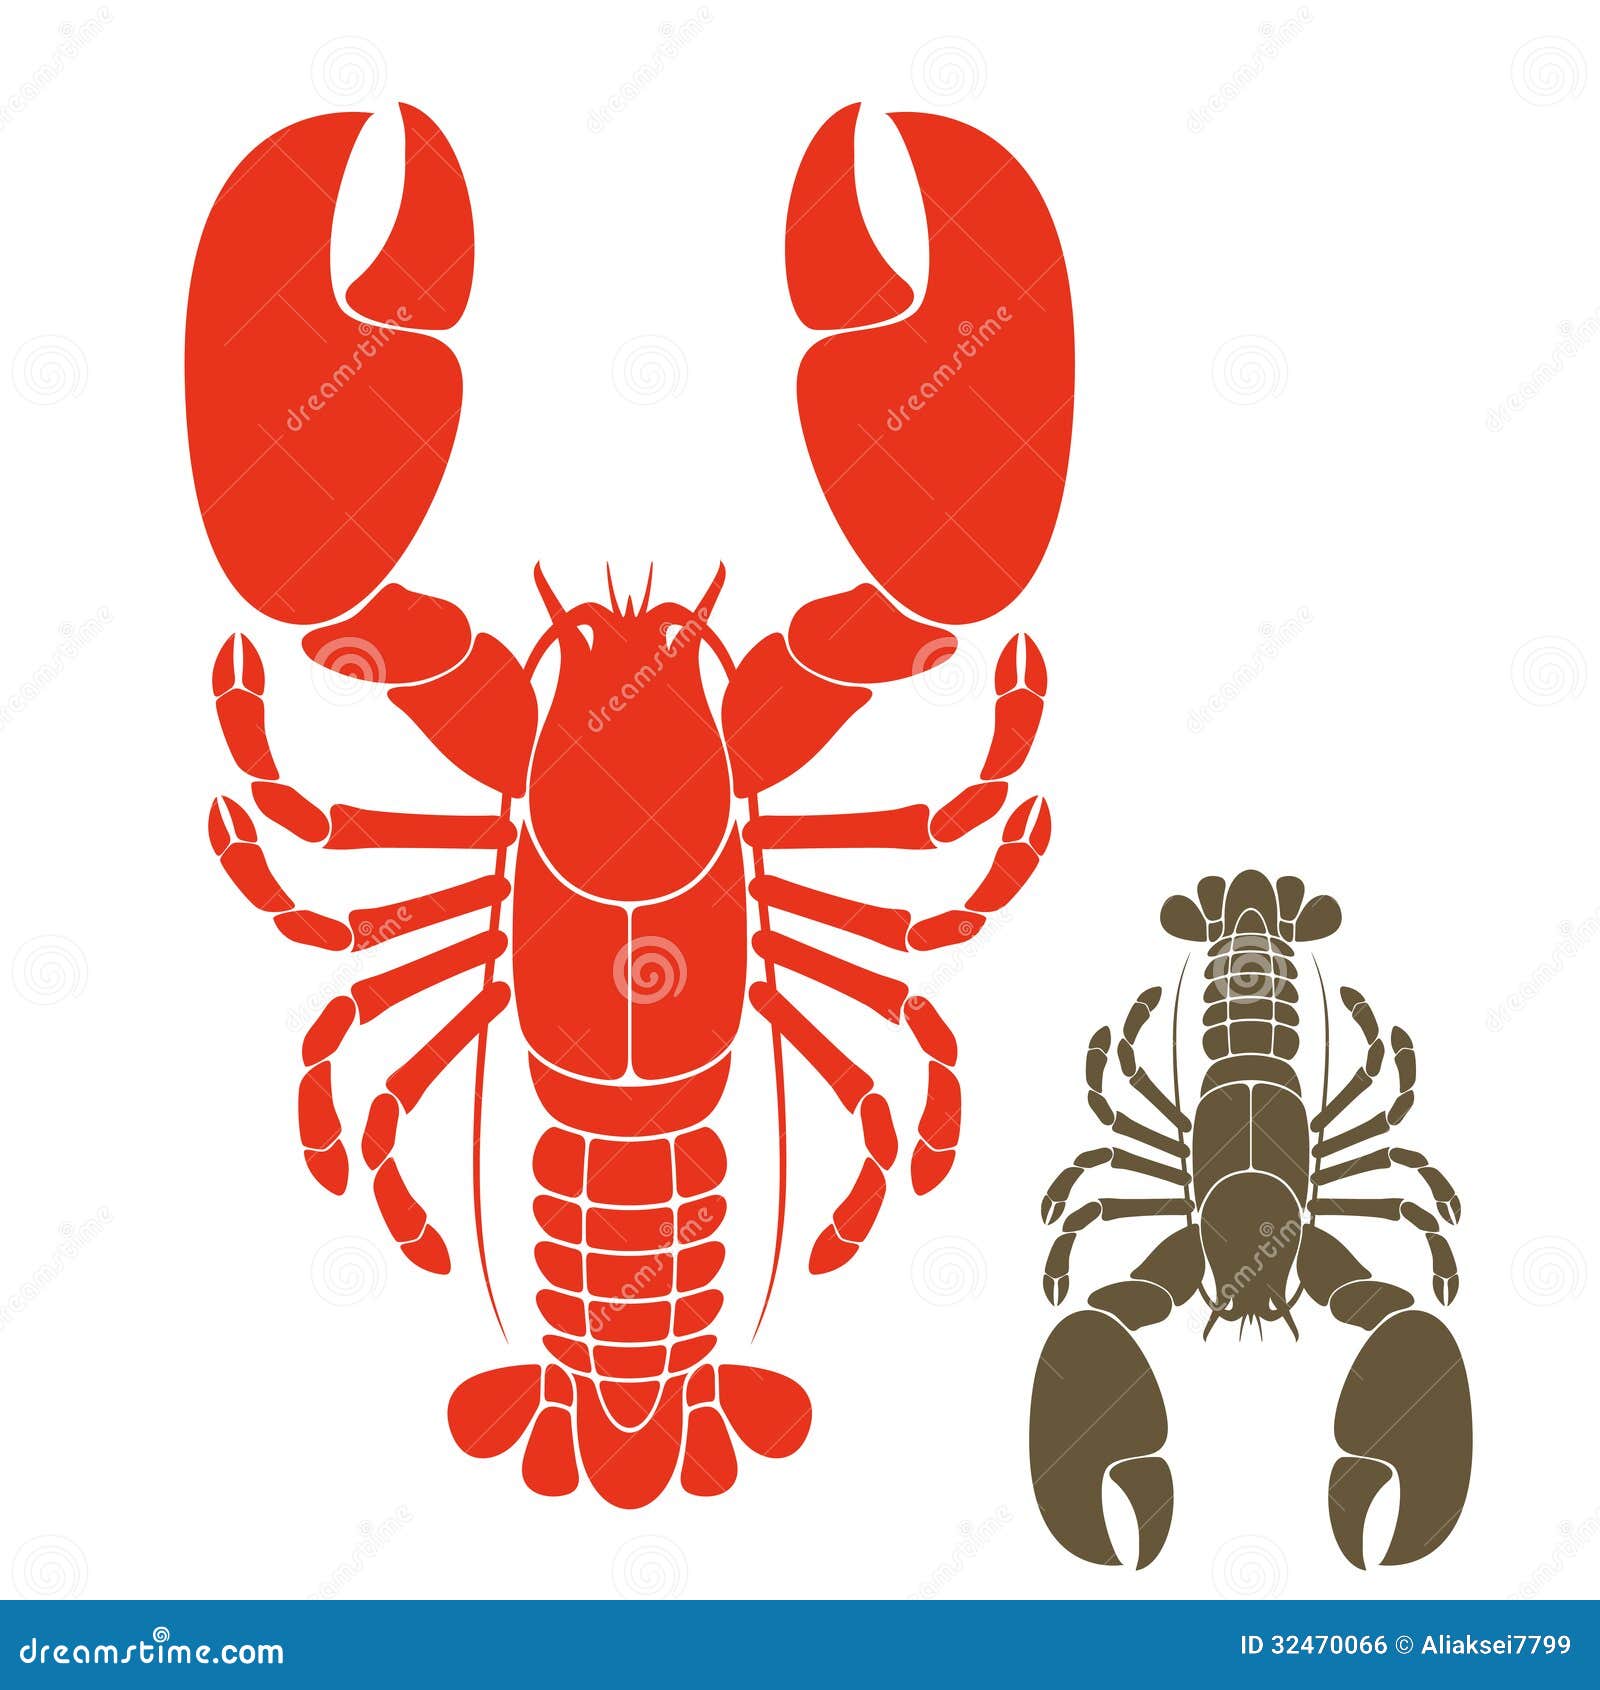 lobster clipart vector - photo #10